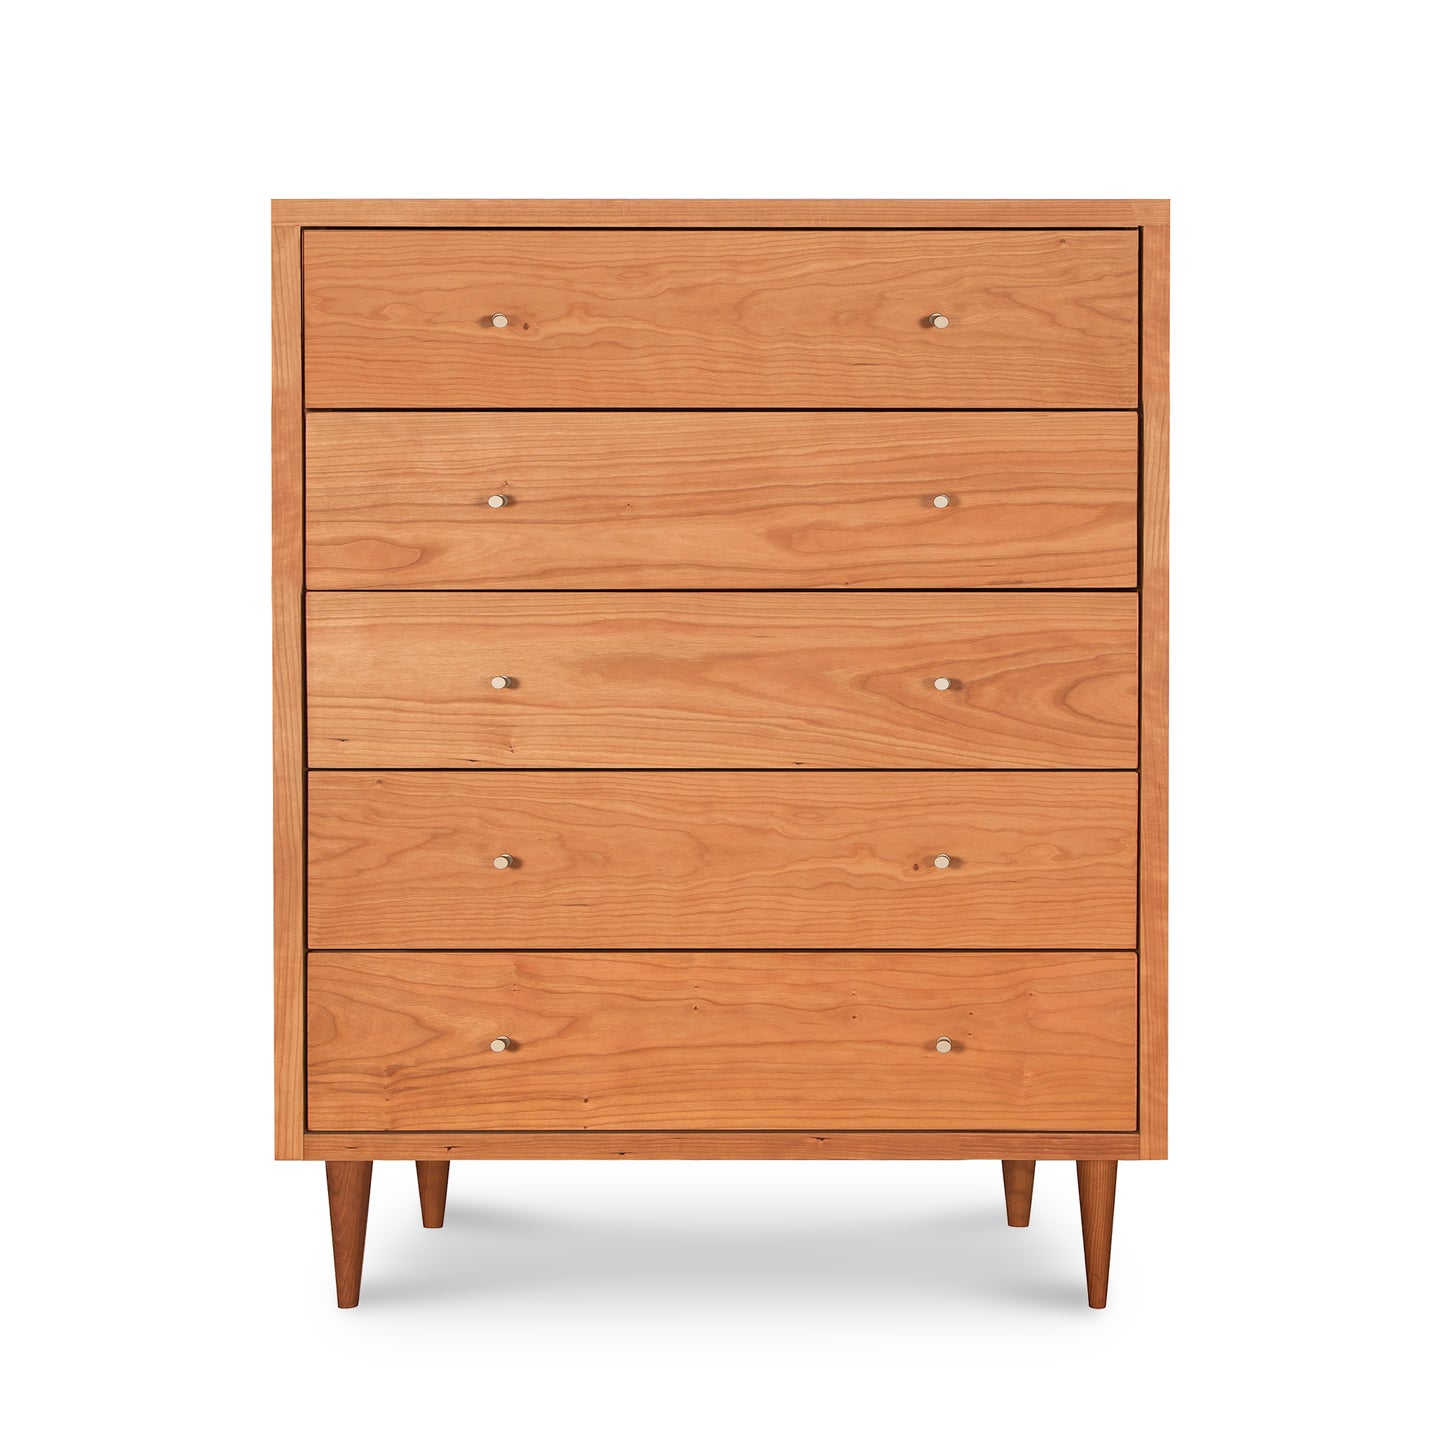 A natural cherry Vermont Furniture Designs Larssen 5-Drawer Wide Chest on a white background.